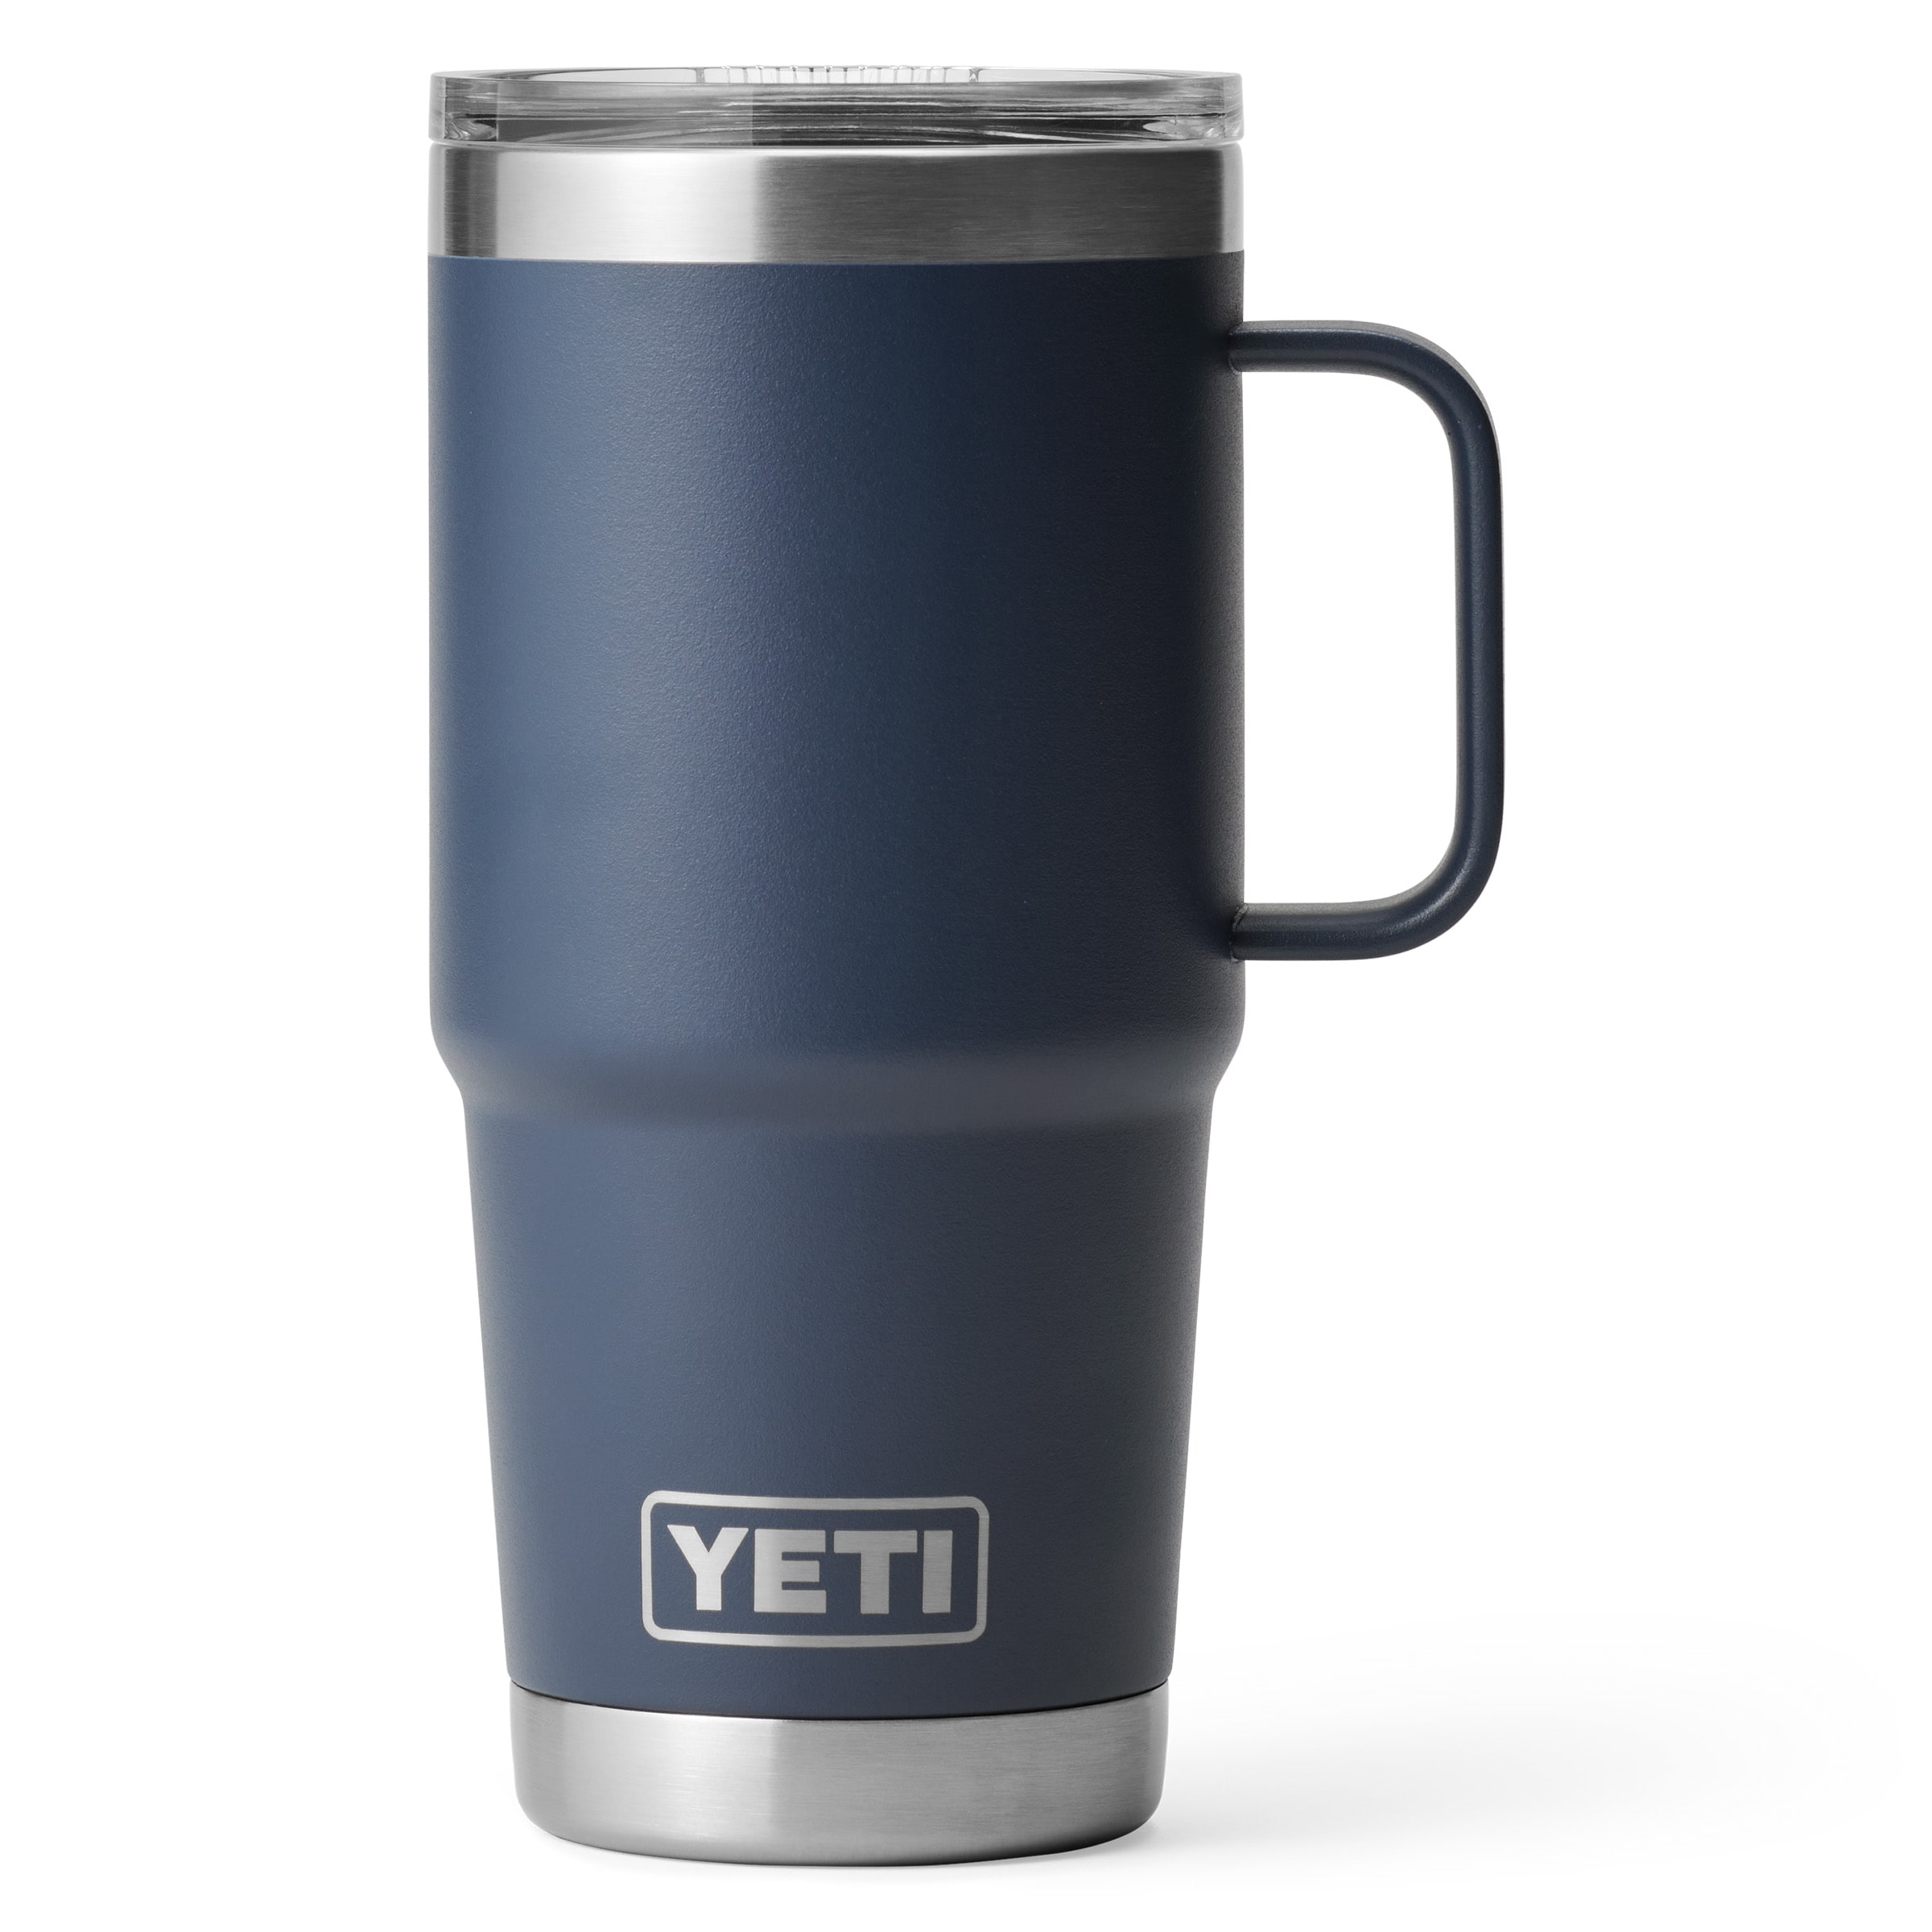 YETI Travel Mugs and Bottles